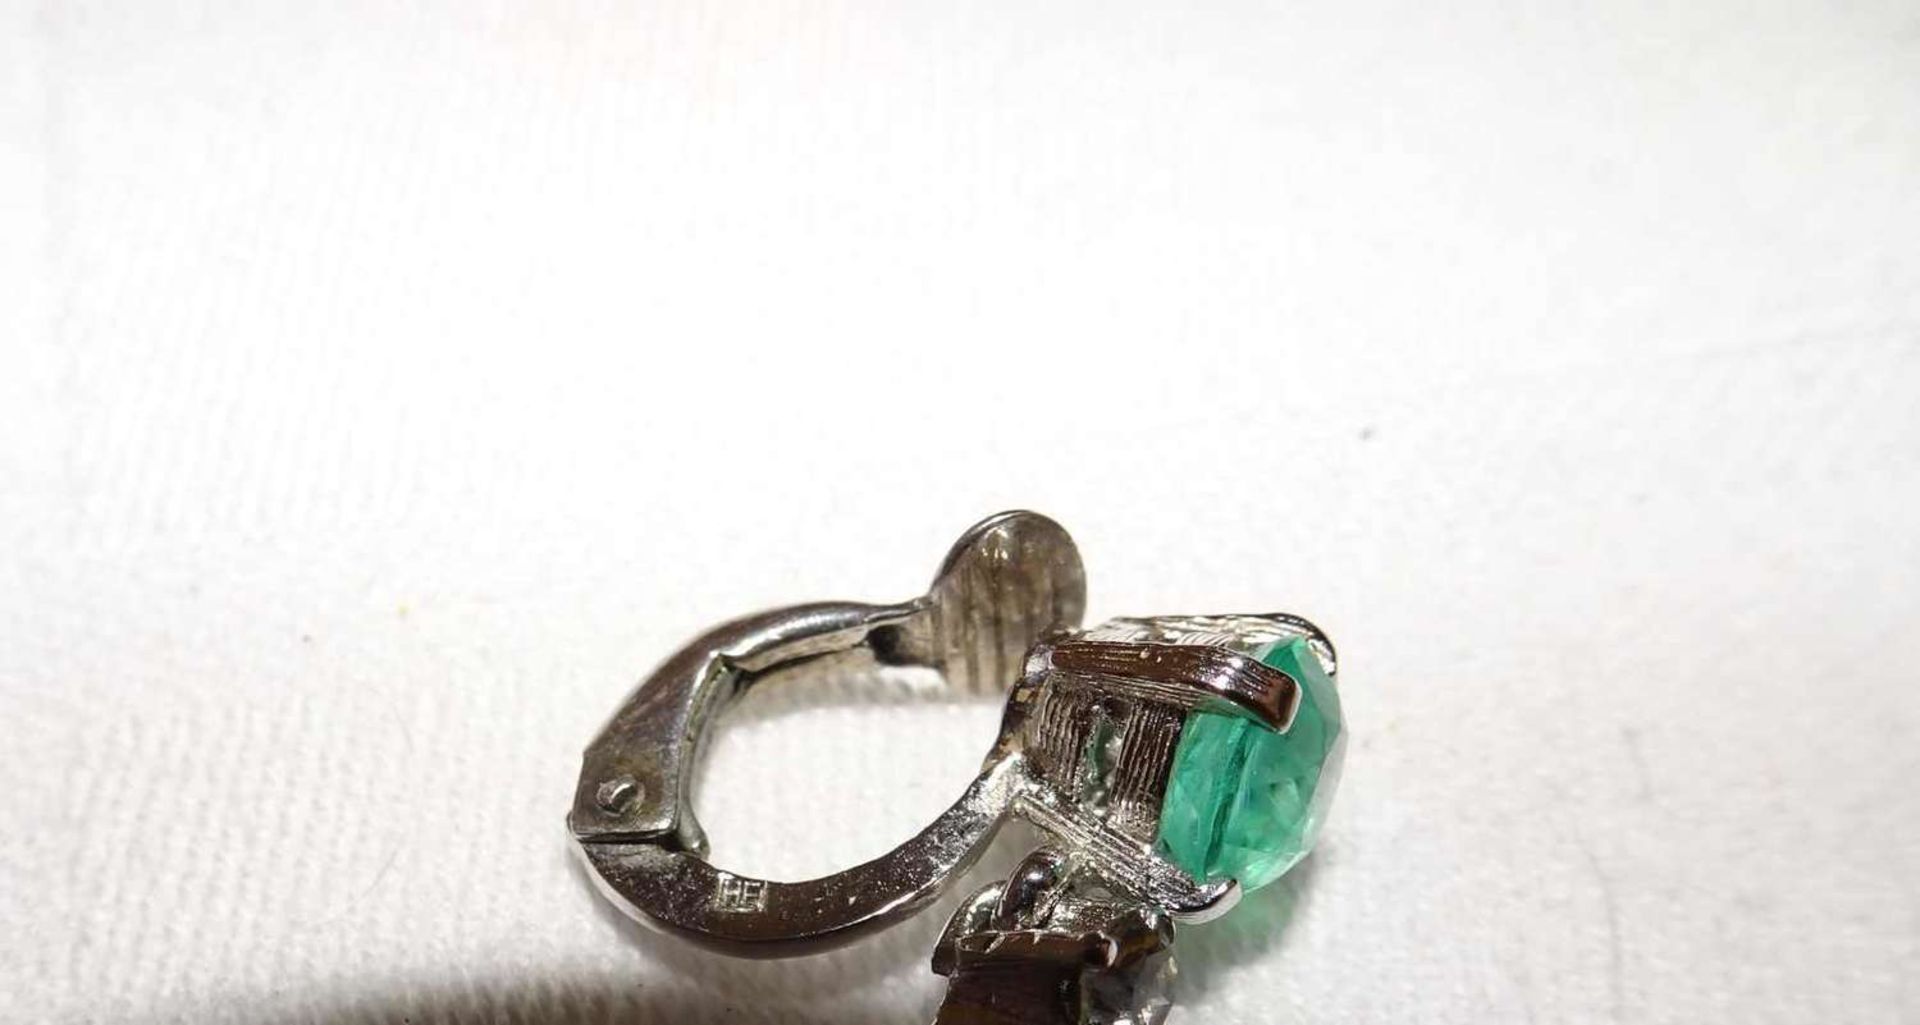 1 Paar Ohrclips, 925er Silber, besetzt mit grünen Glassteinen. Gesamtgewicht ca. 7,5 gr. 1 pair of - Image 2 of 2